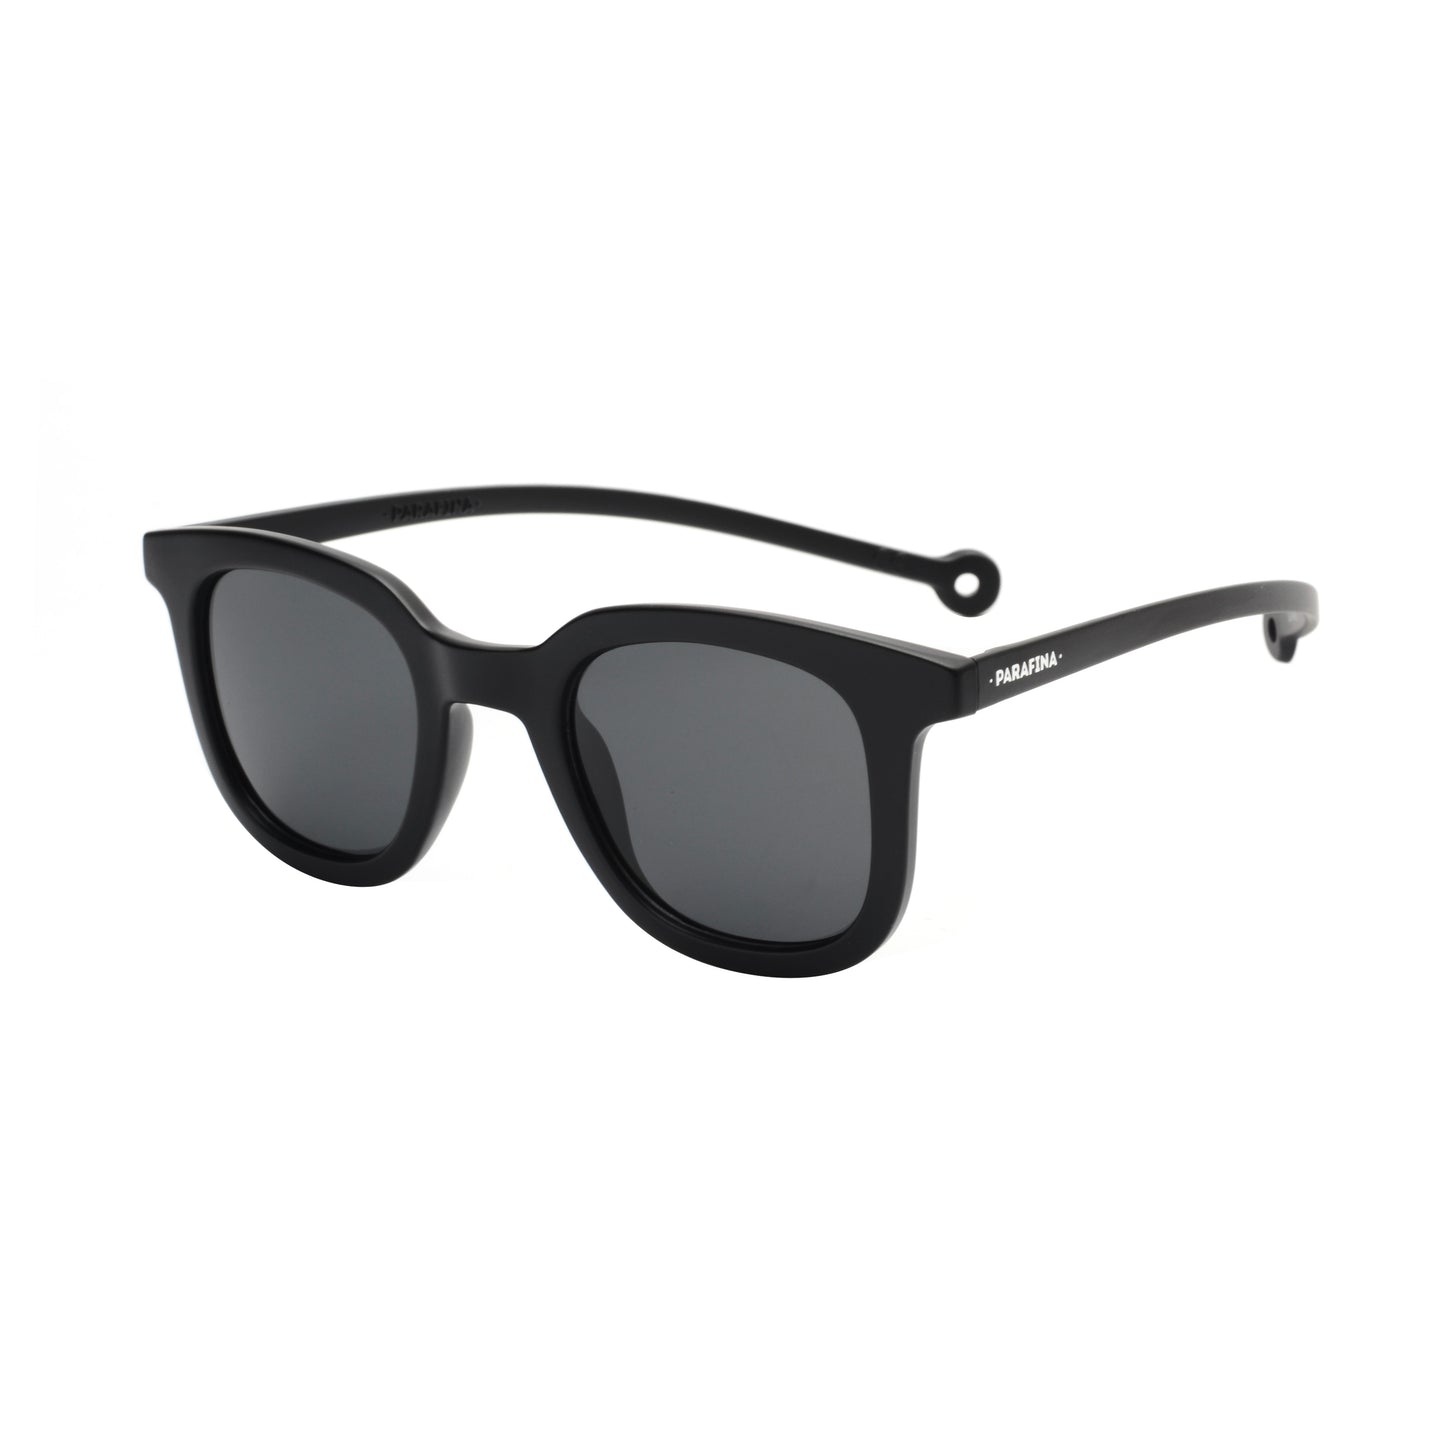 Load image into Gallery viewer, CAUCE Sunglasses - Black Matt
